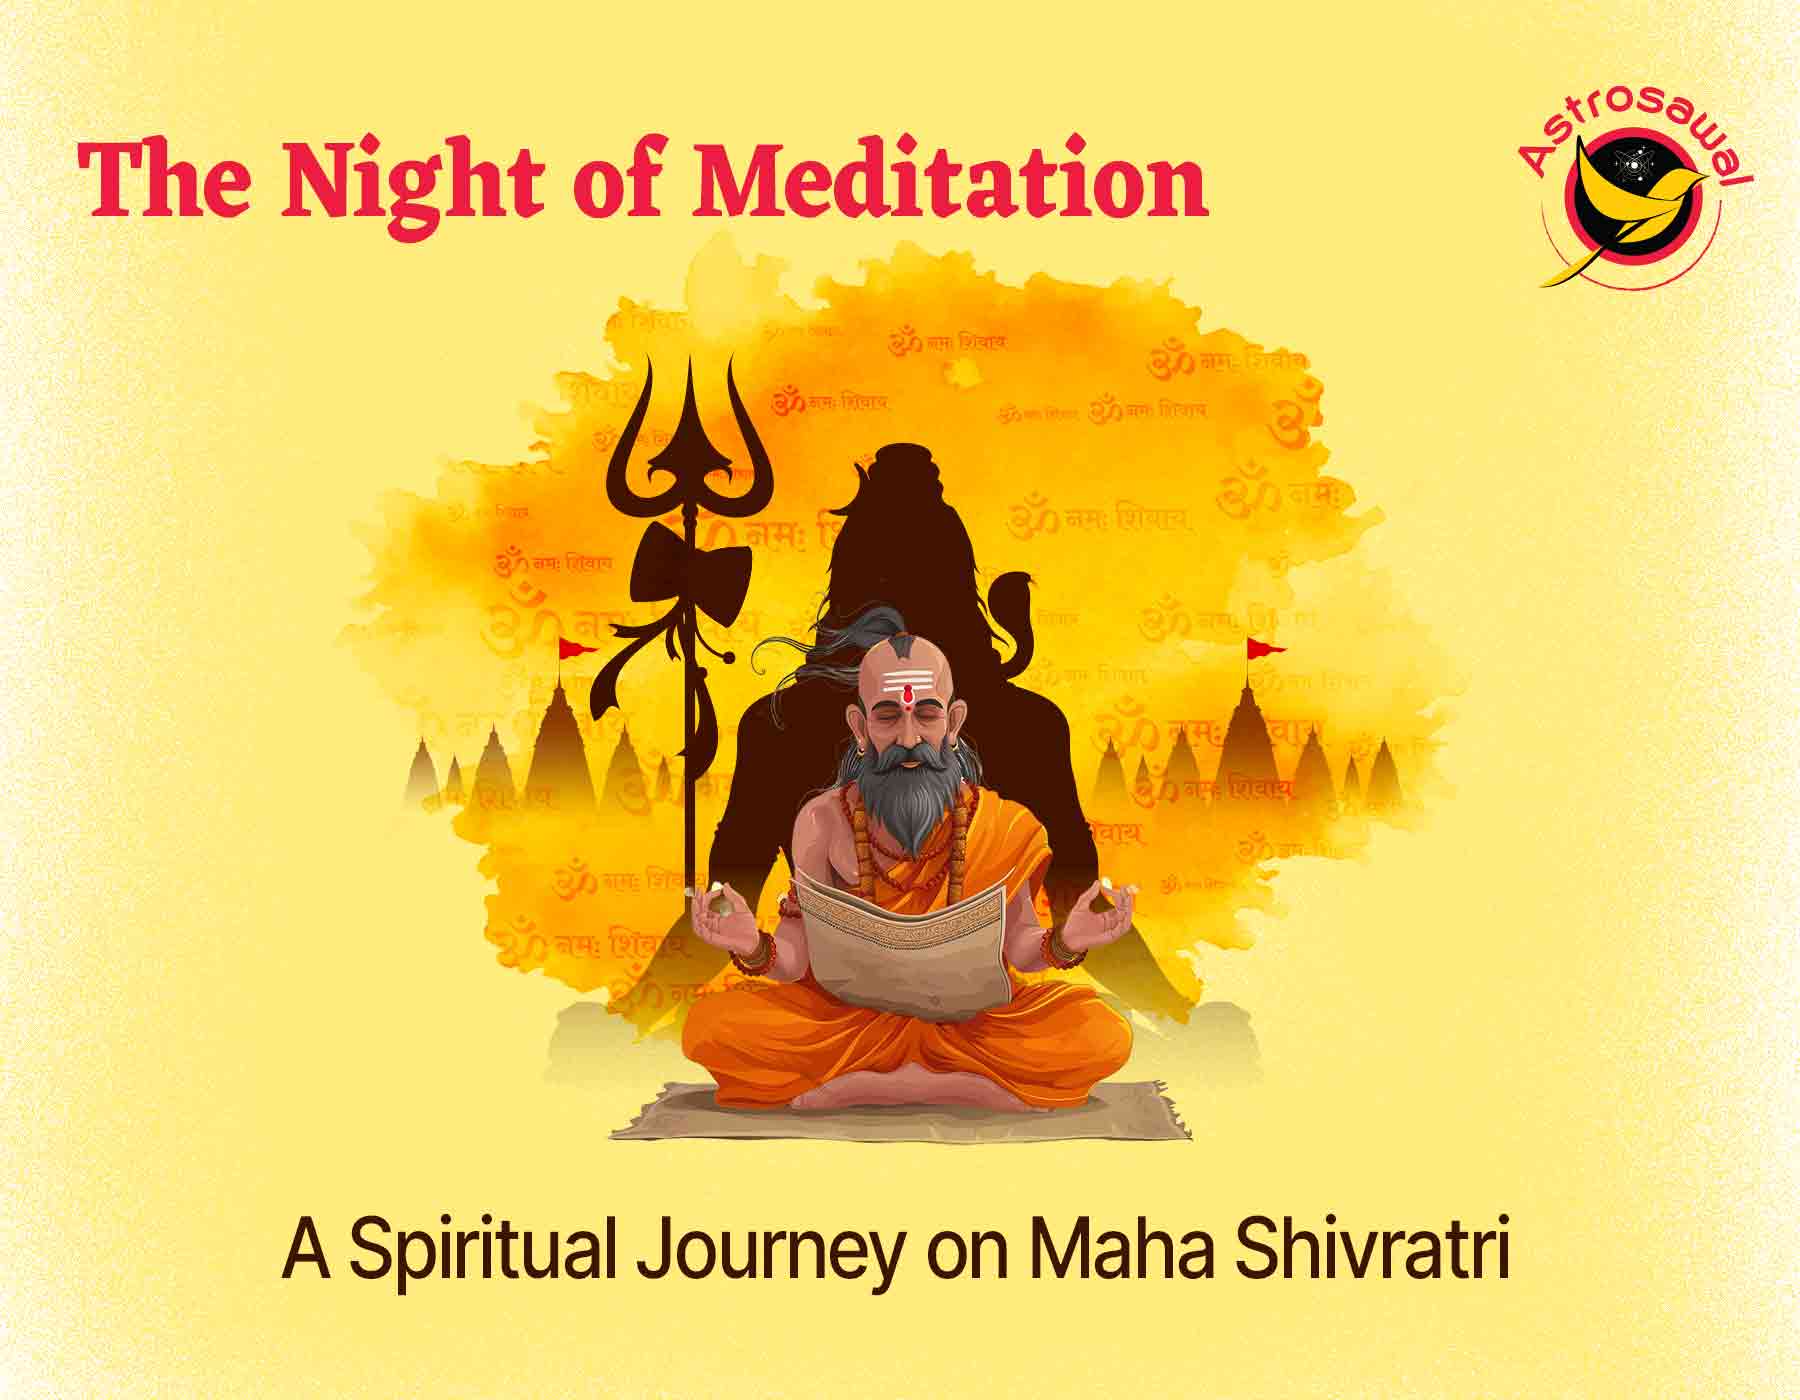 The Night of Meditation: A Spiritual Journey on Maha Shivratri